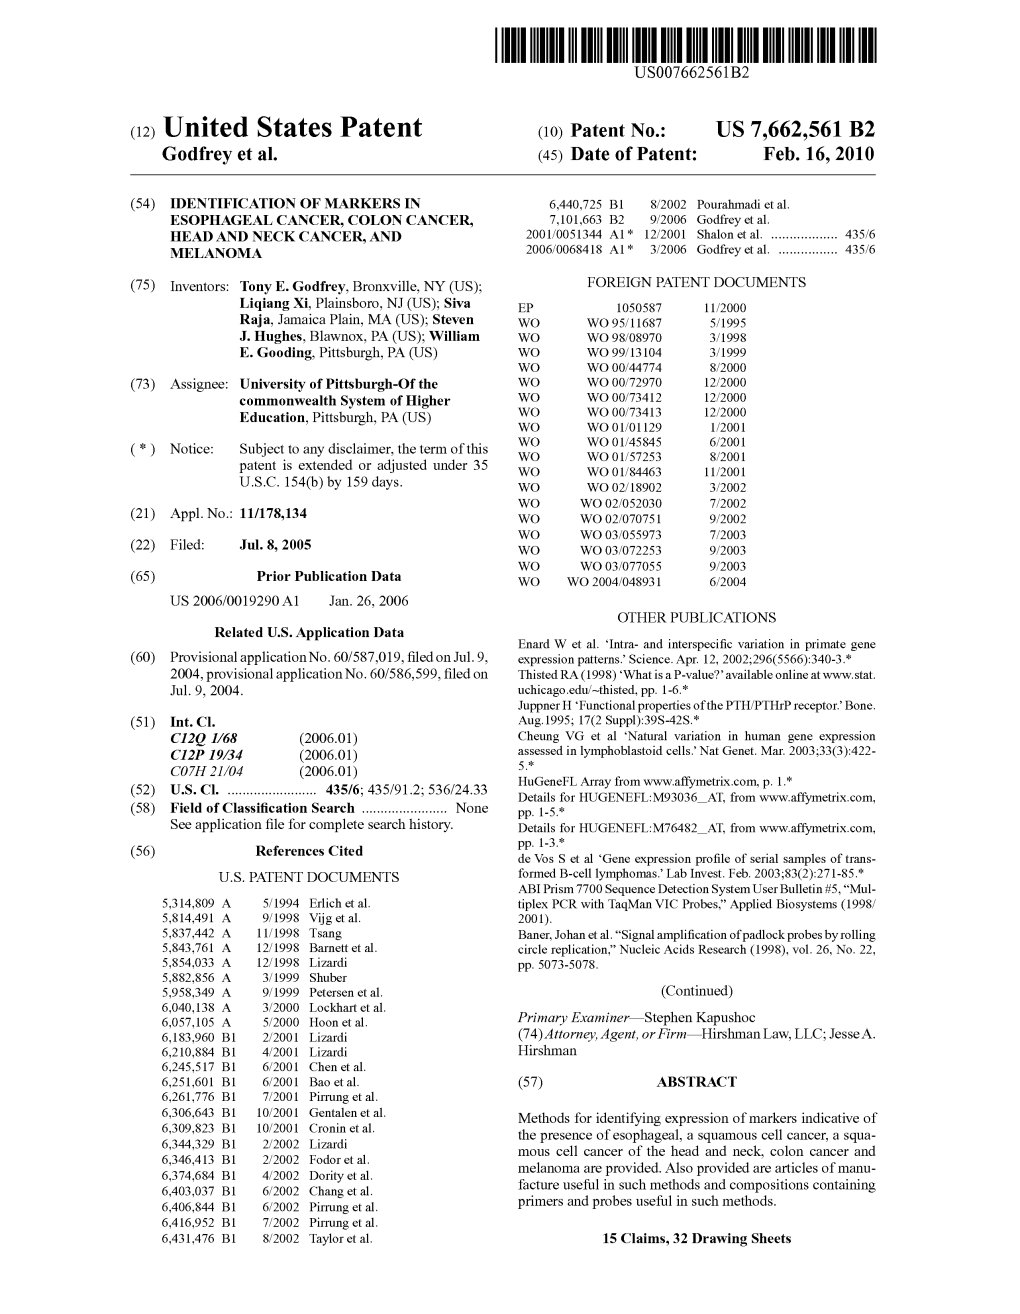 (12) United States Patent (10) Patent No.: US 7,662,561 B2 Godfrey Et Al